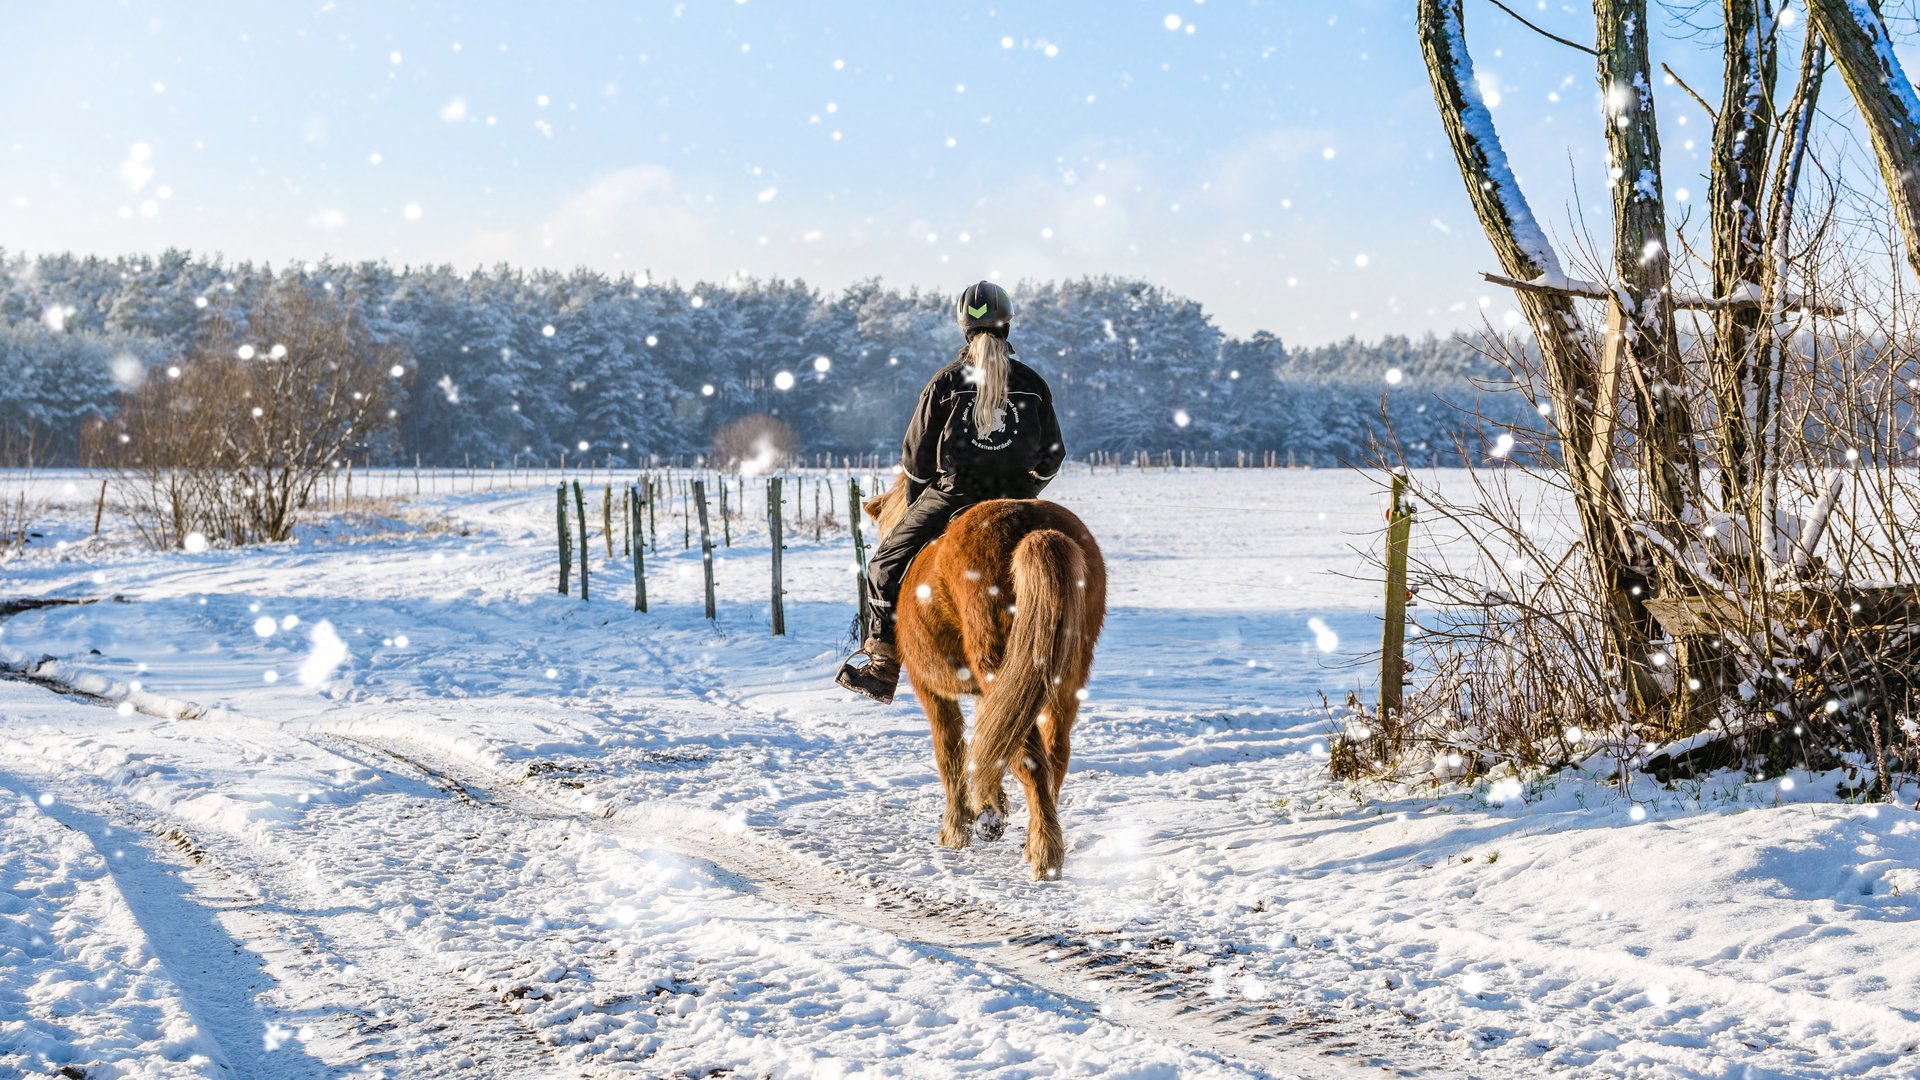 berittene Pferde im Schnee